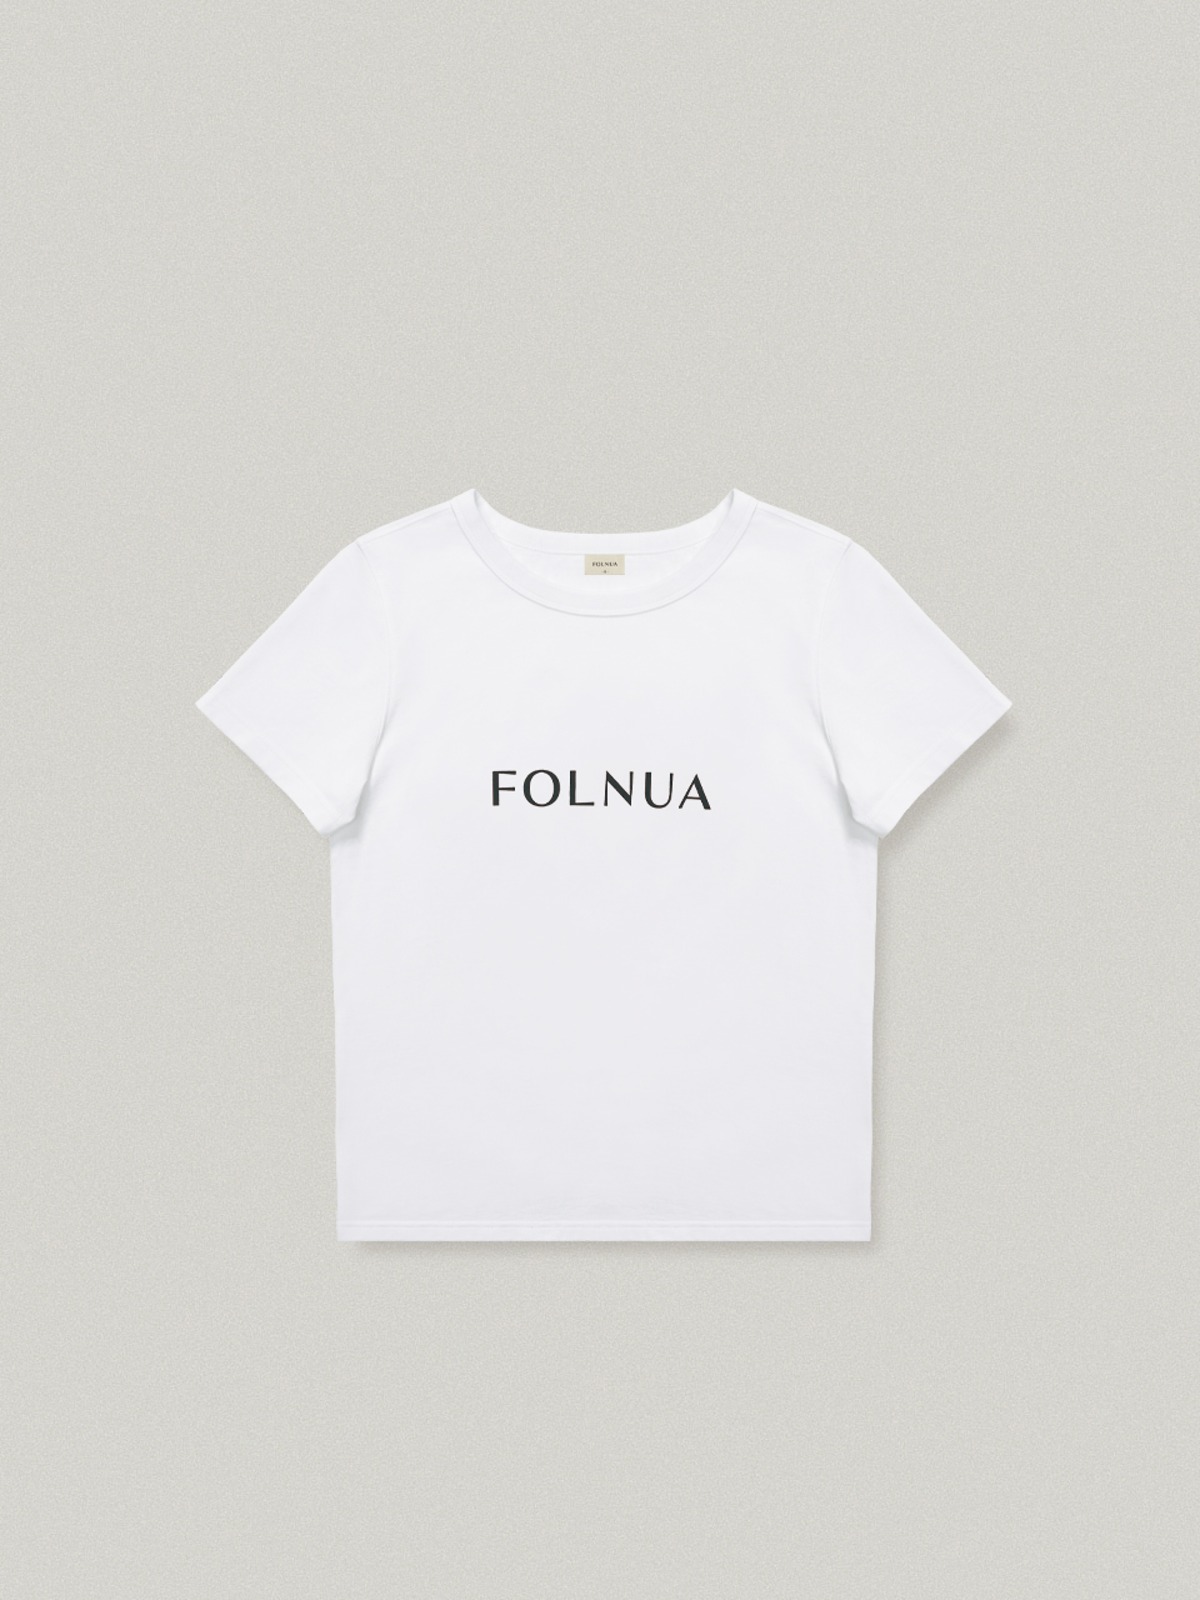 FOLNUA(フォルニュア) ロゴTシャツインブラック